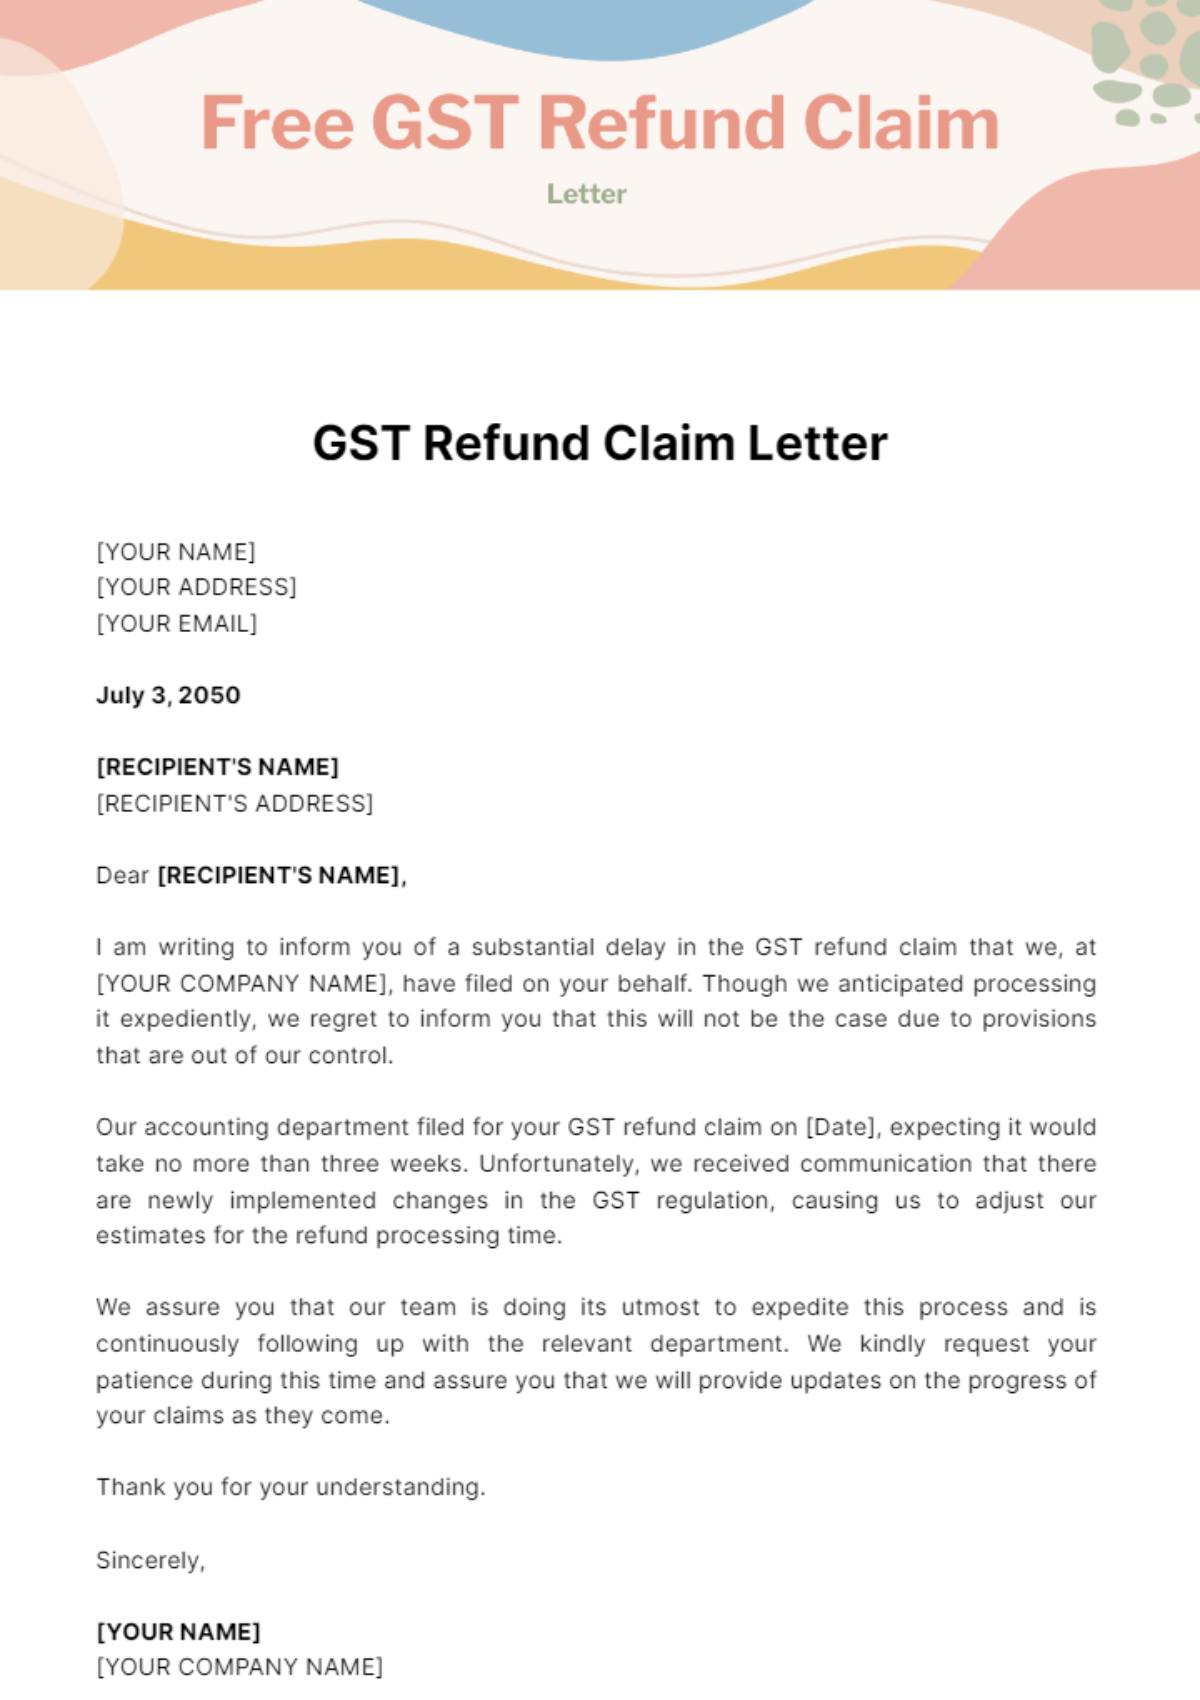 GST Refund Claim Letter Template